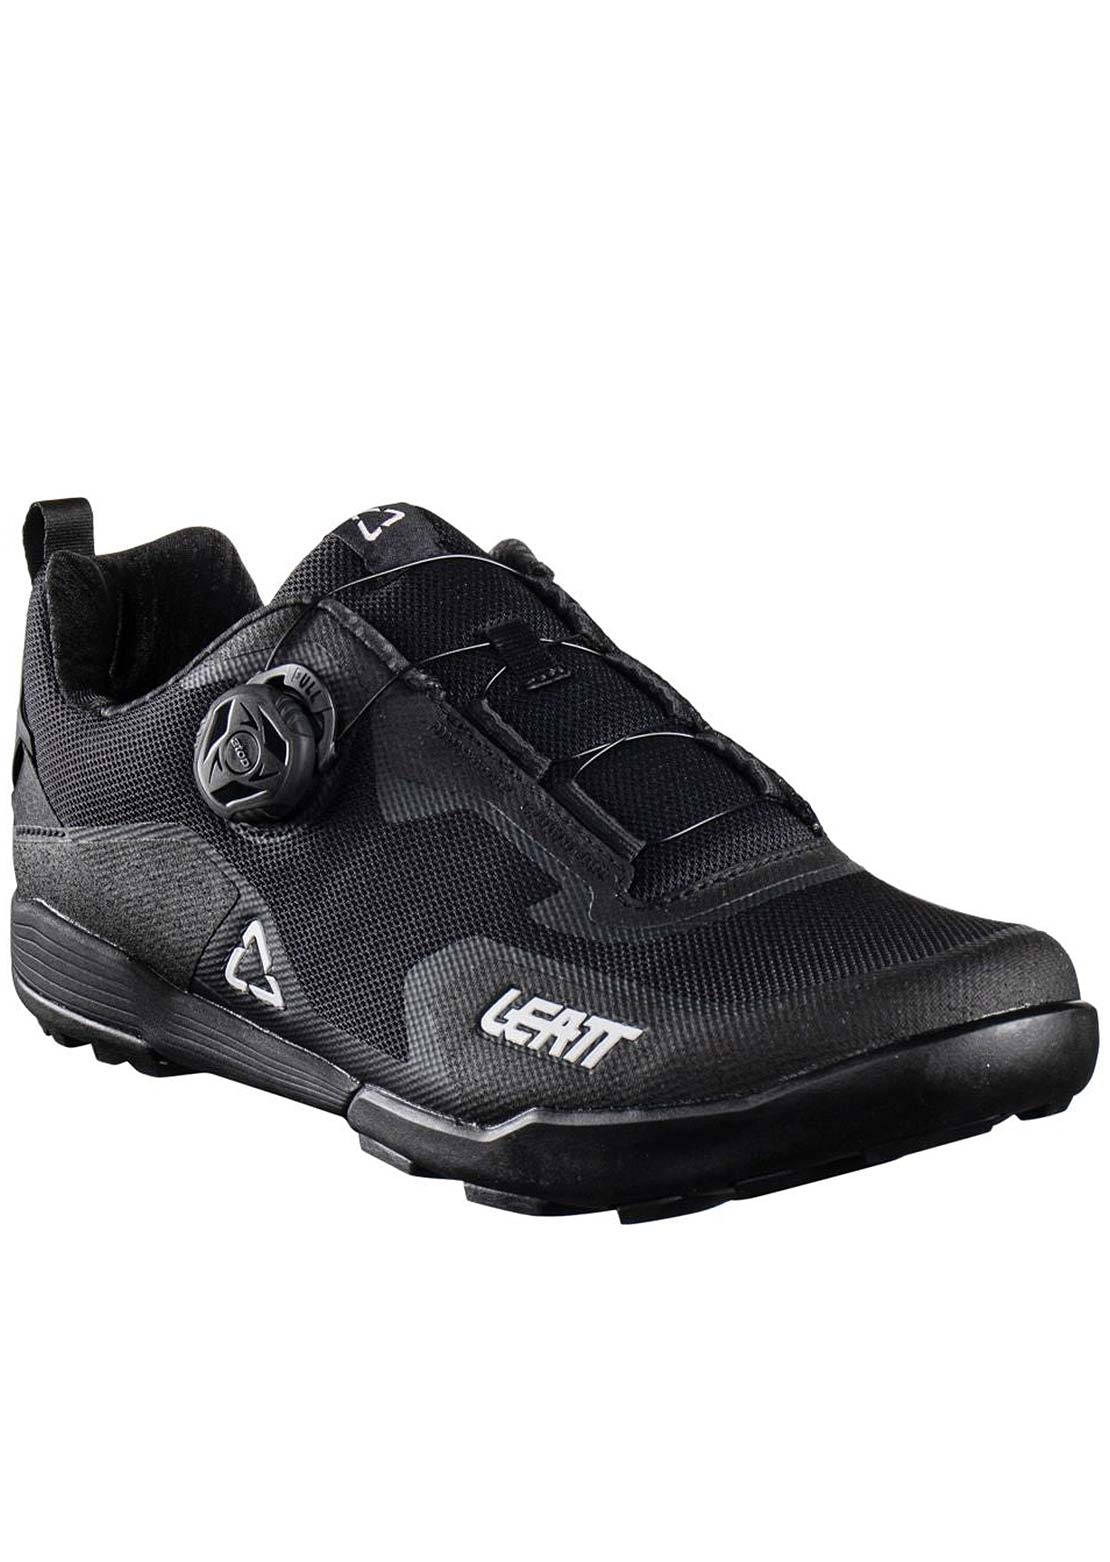 Leatt 6.0 Clip Mountain Bike Shoes Black